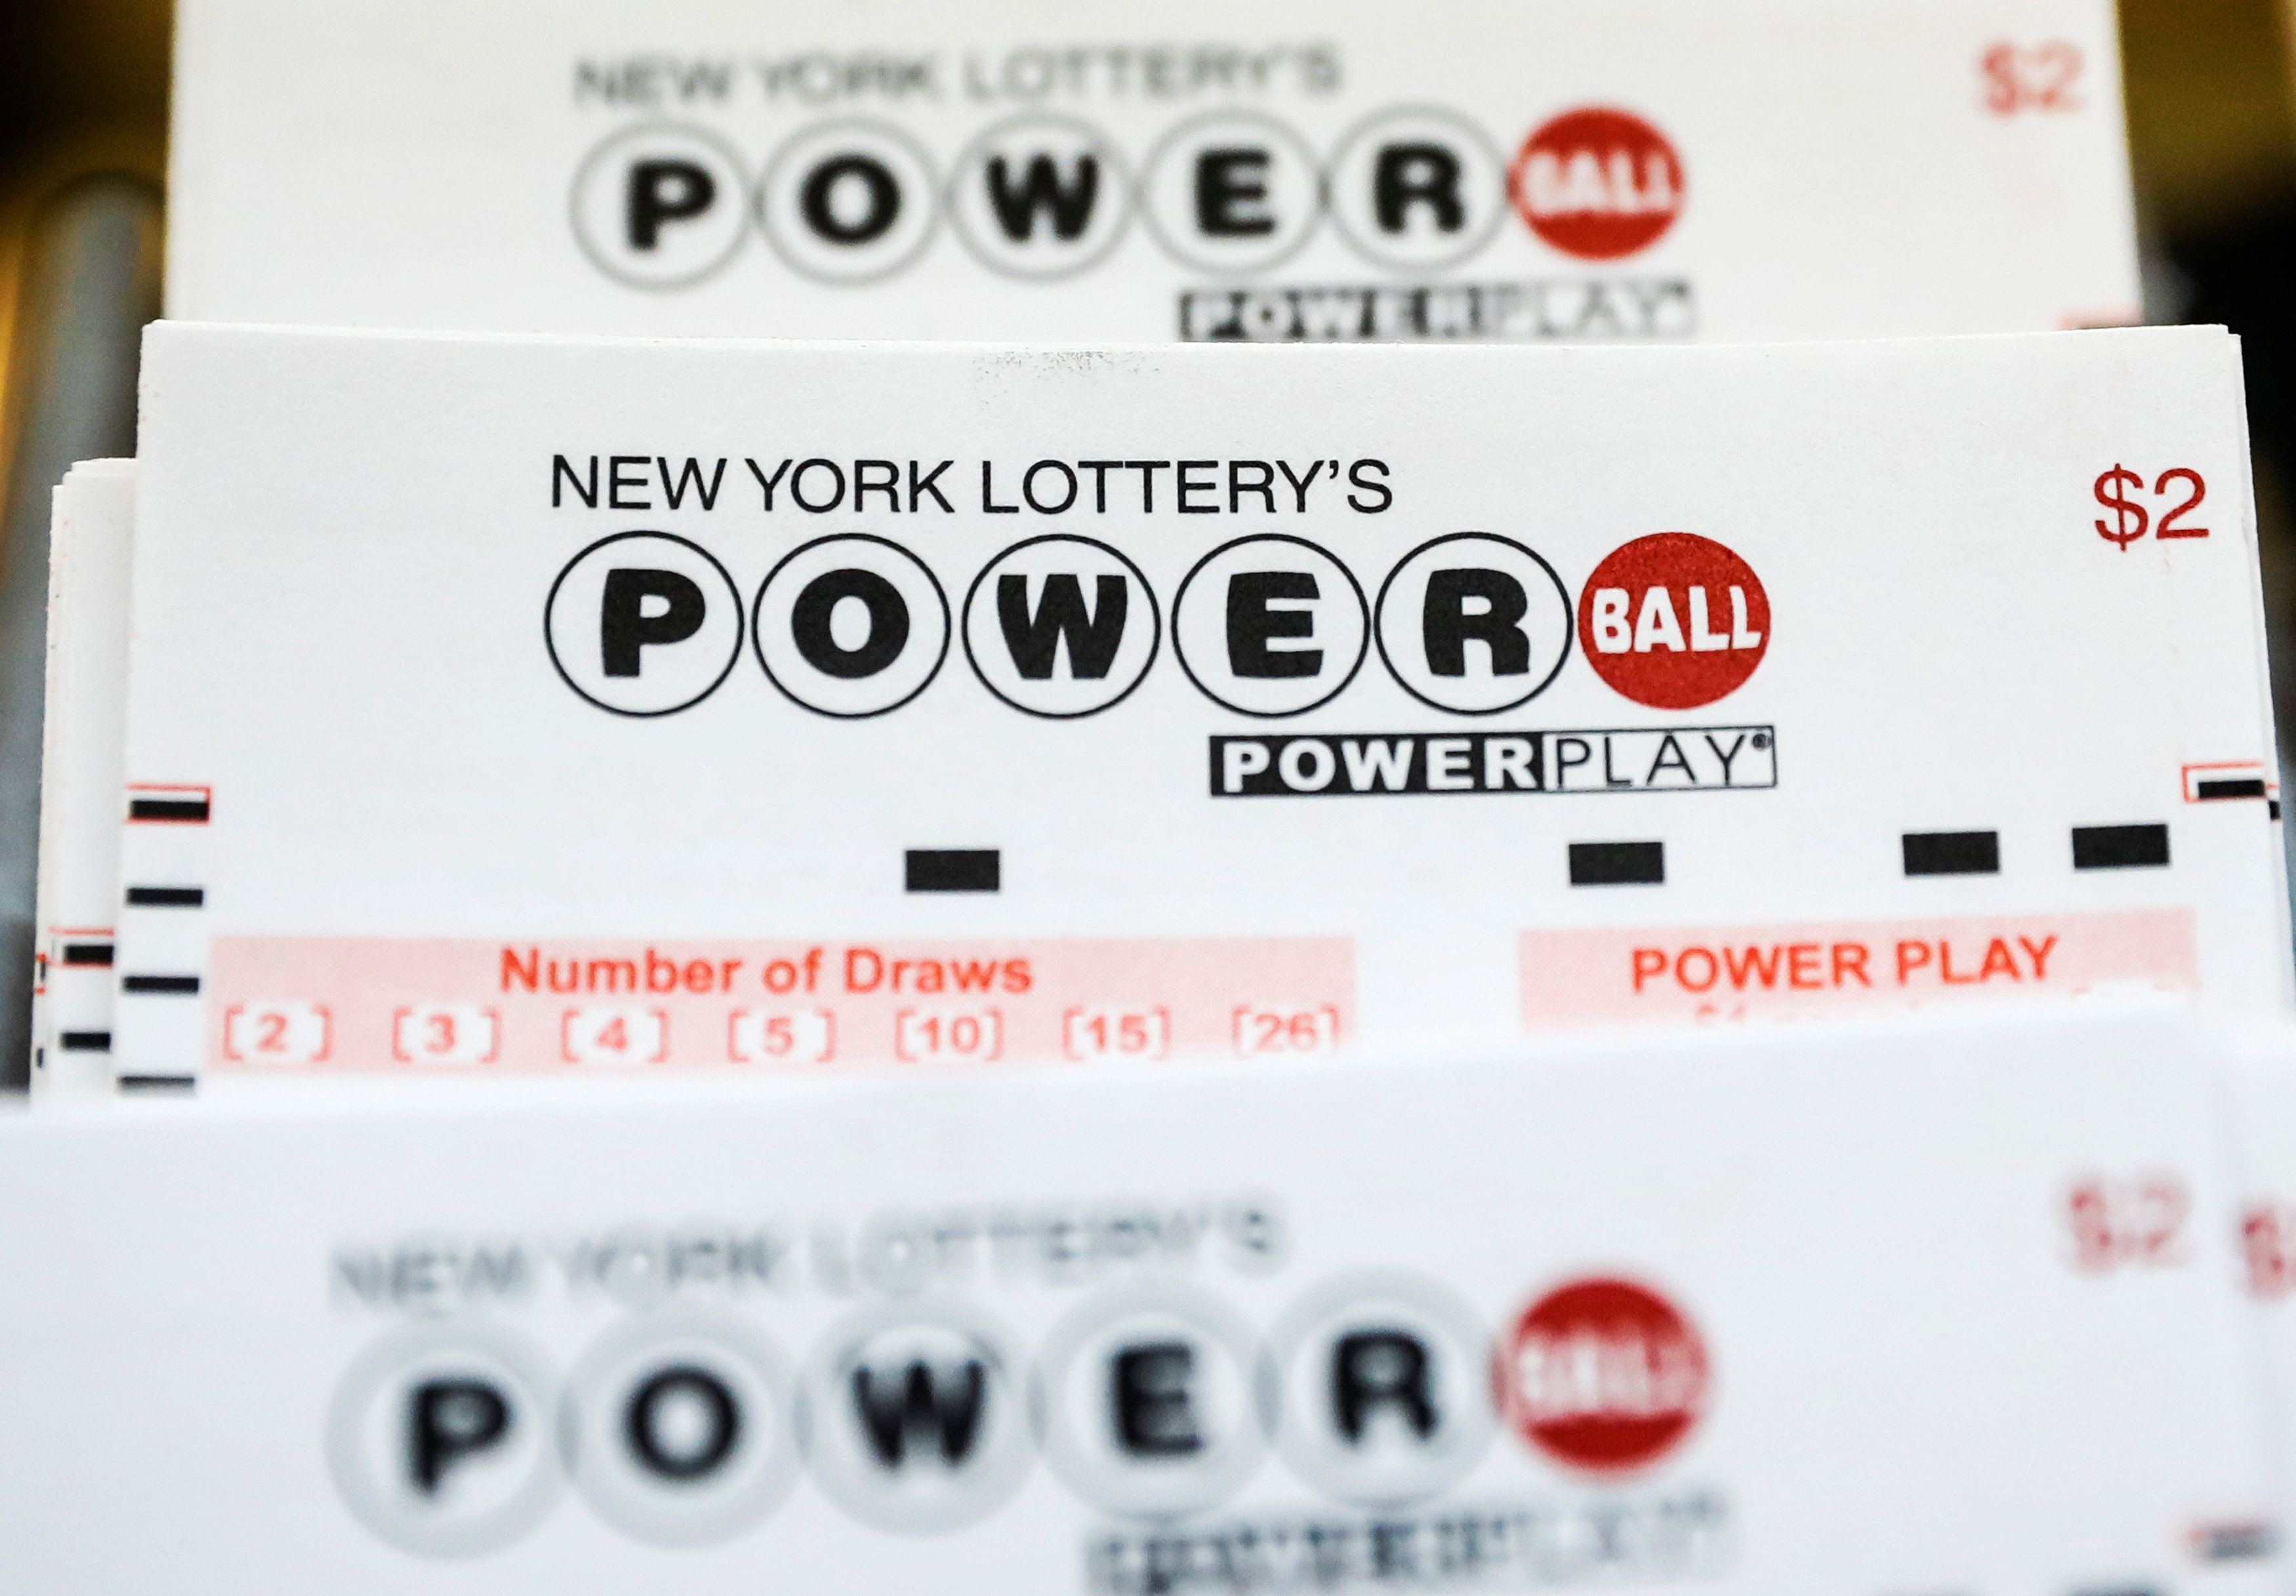 Ticket sold in California wins 448 million U.S. Powerball jackpot